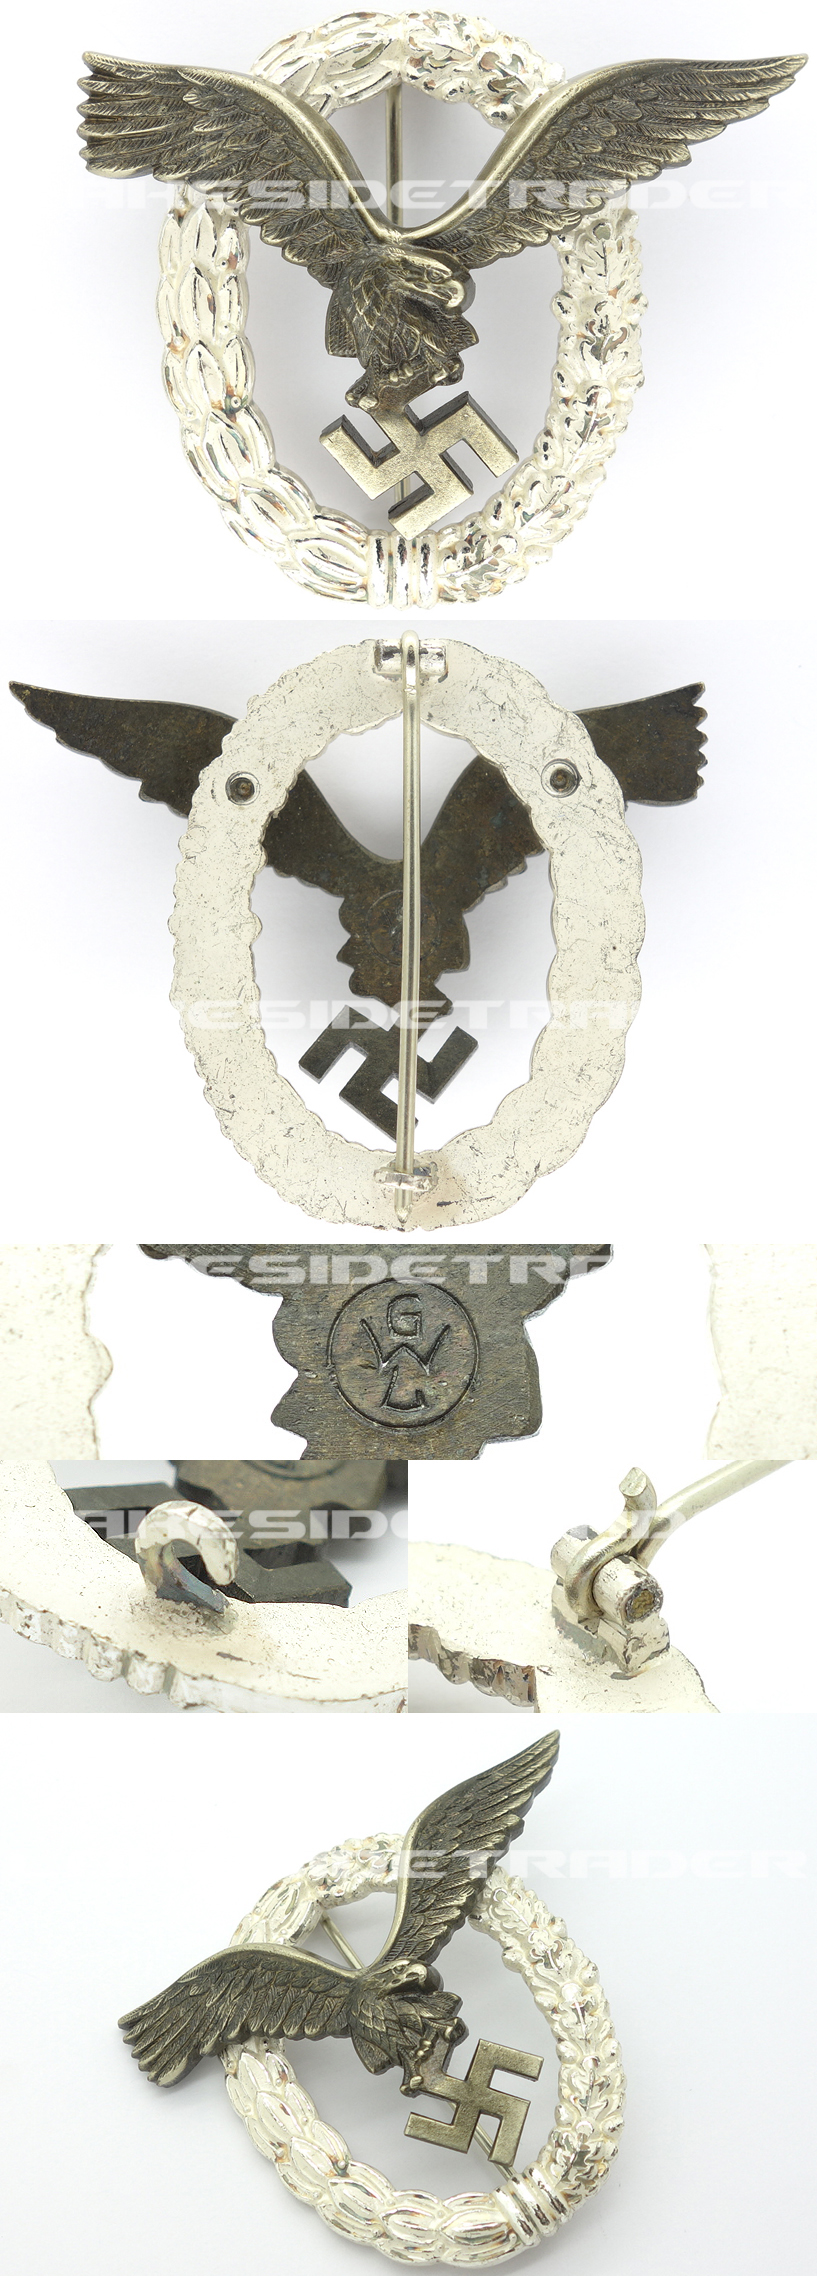 Mint - Luftwaffe Pilot Badge by GWL